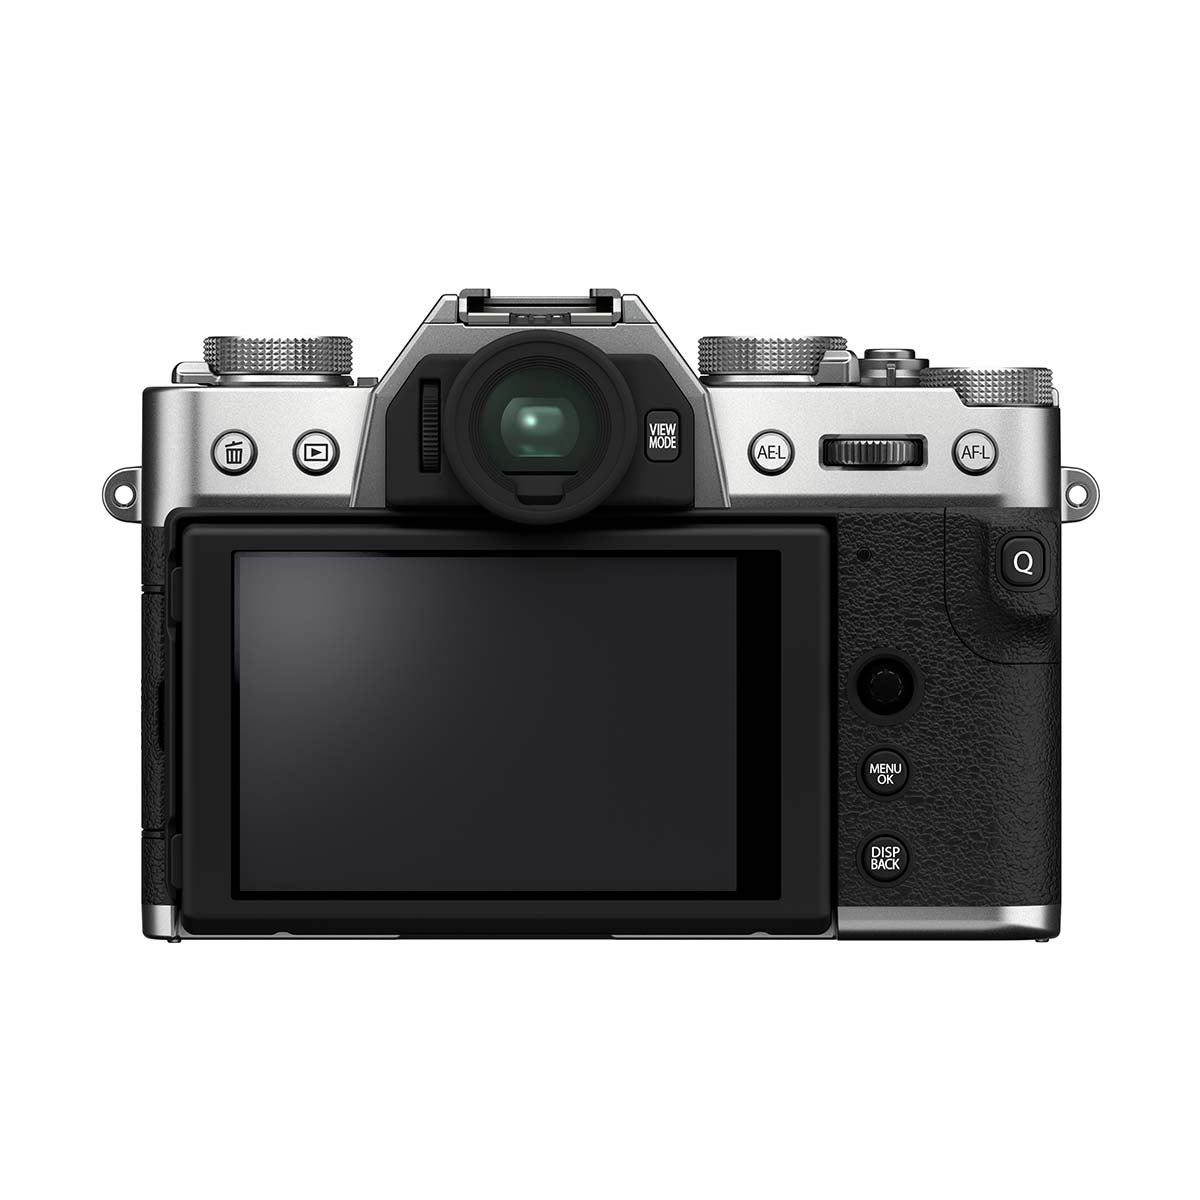 Fujifilm X-T30 II with XF 18-55mm Lens Kit (Silver)